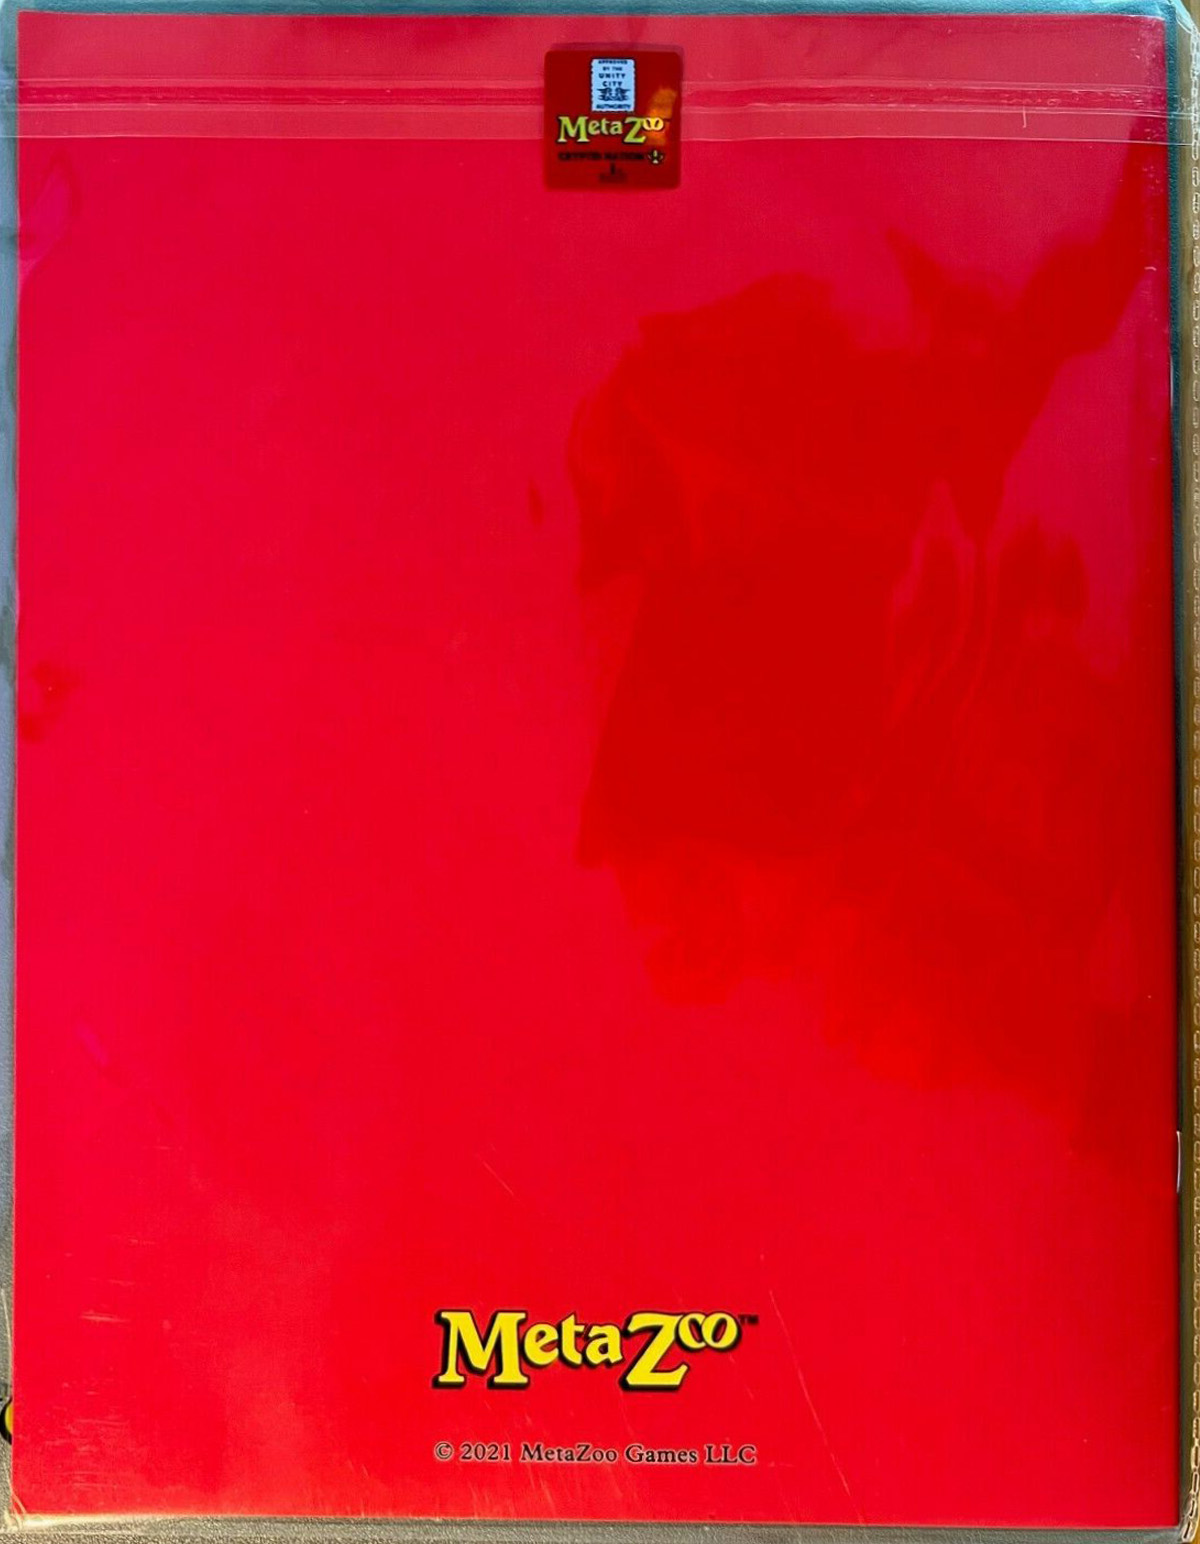 MetaZoo Illustrated Novel - Chapter 3 Print 1 - Back